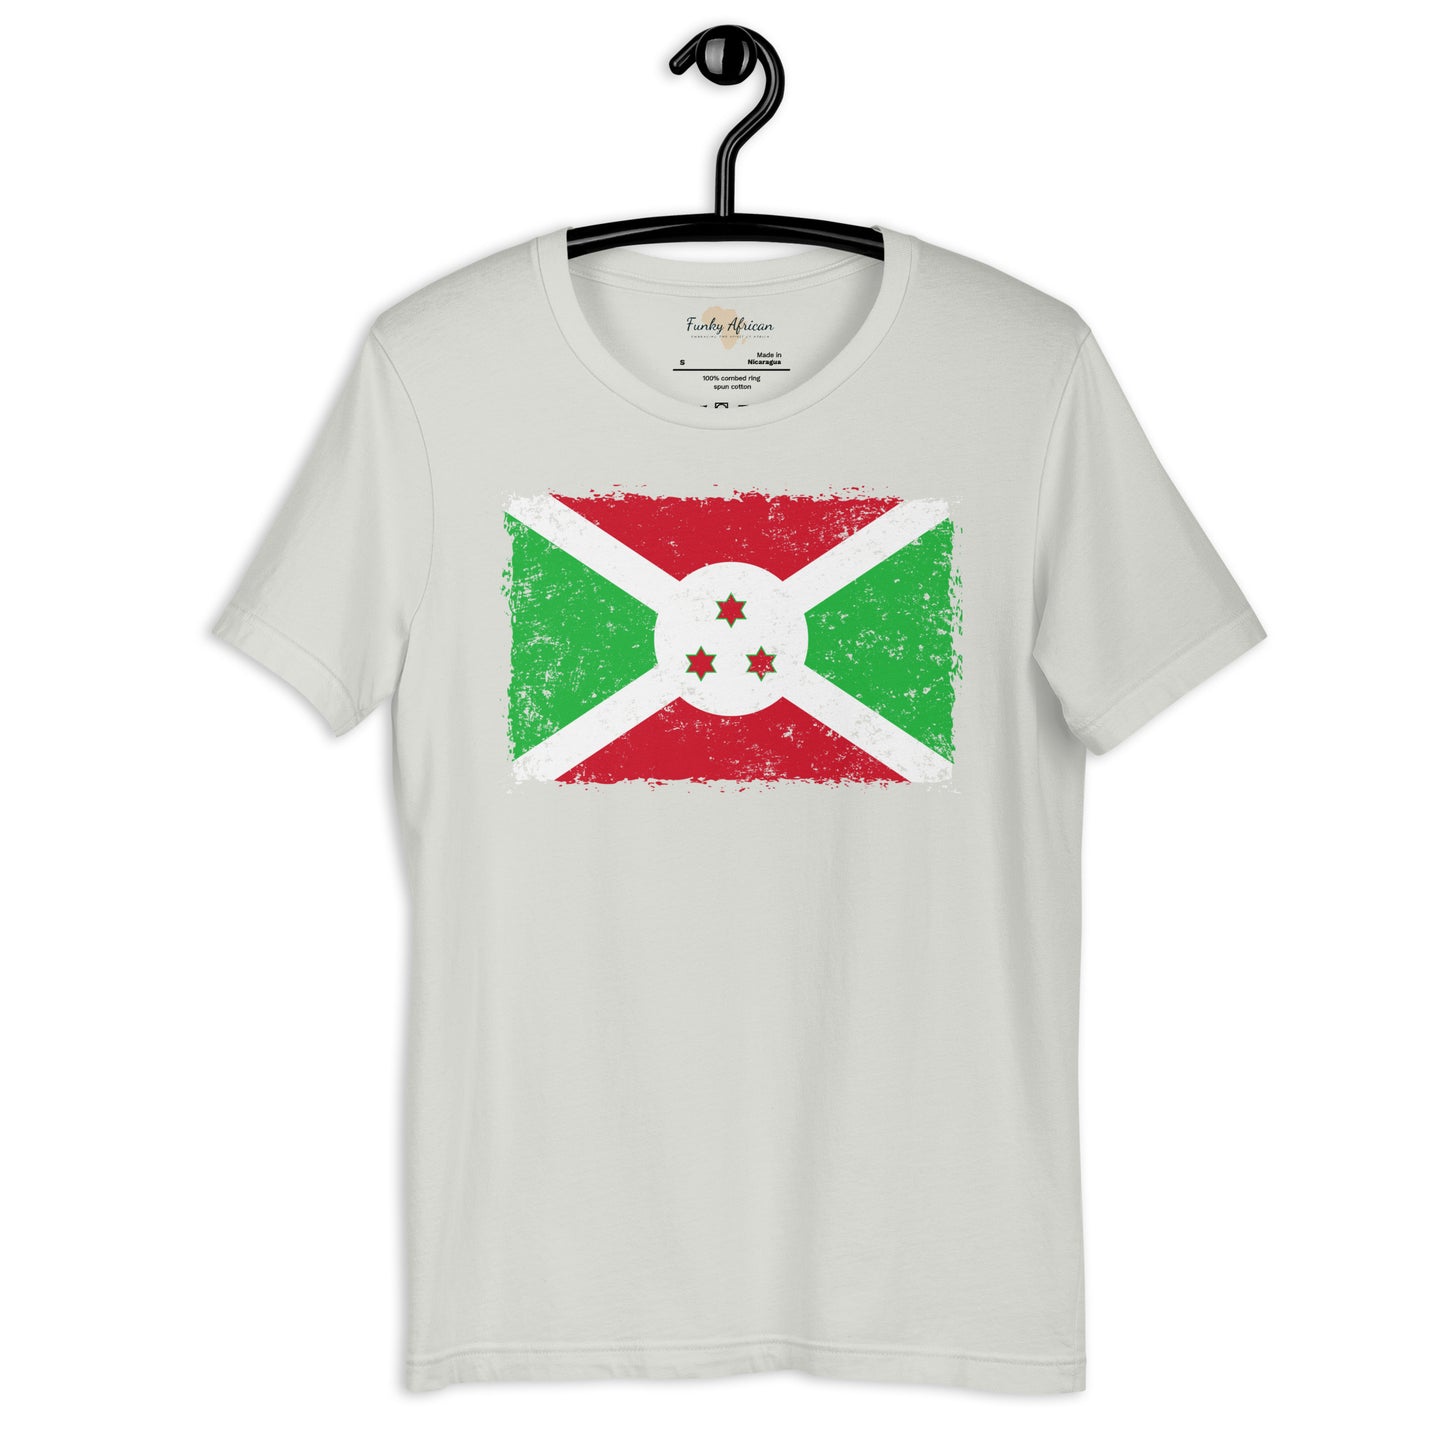 Burundi grunge unisex tee